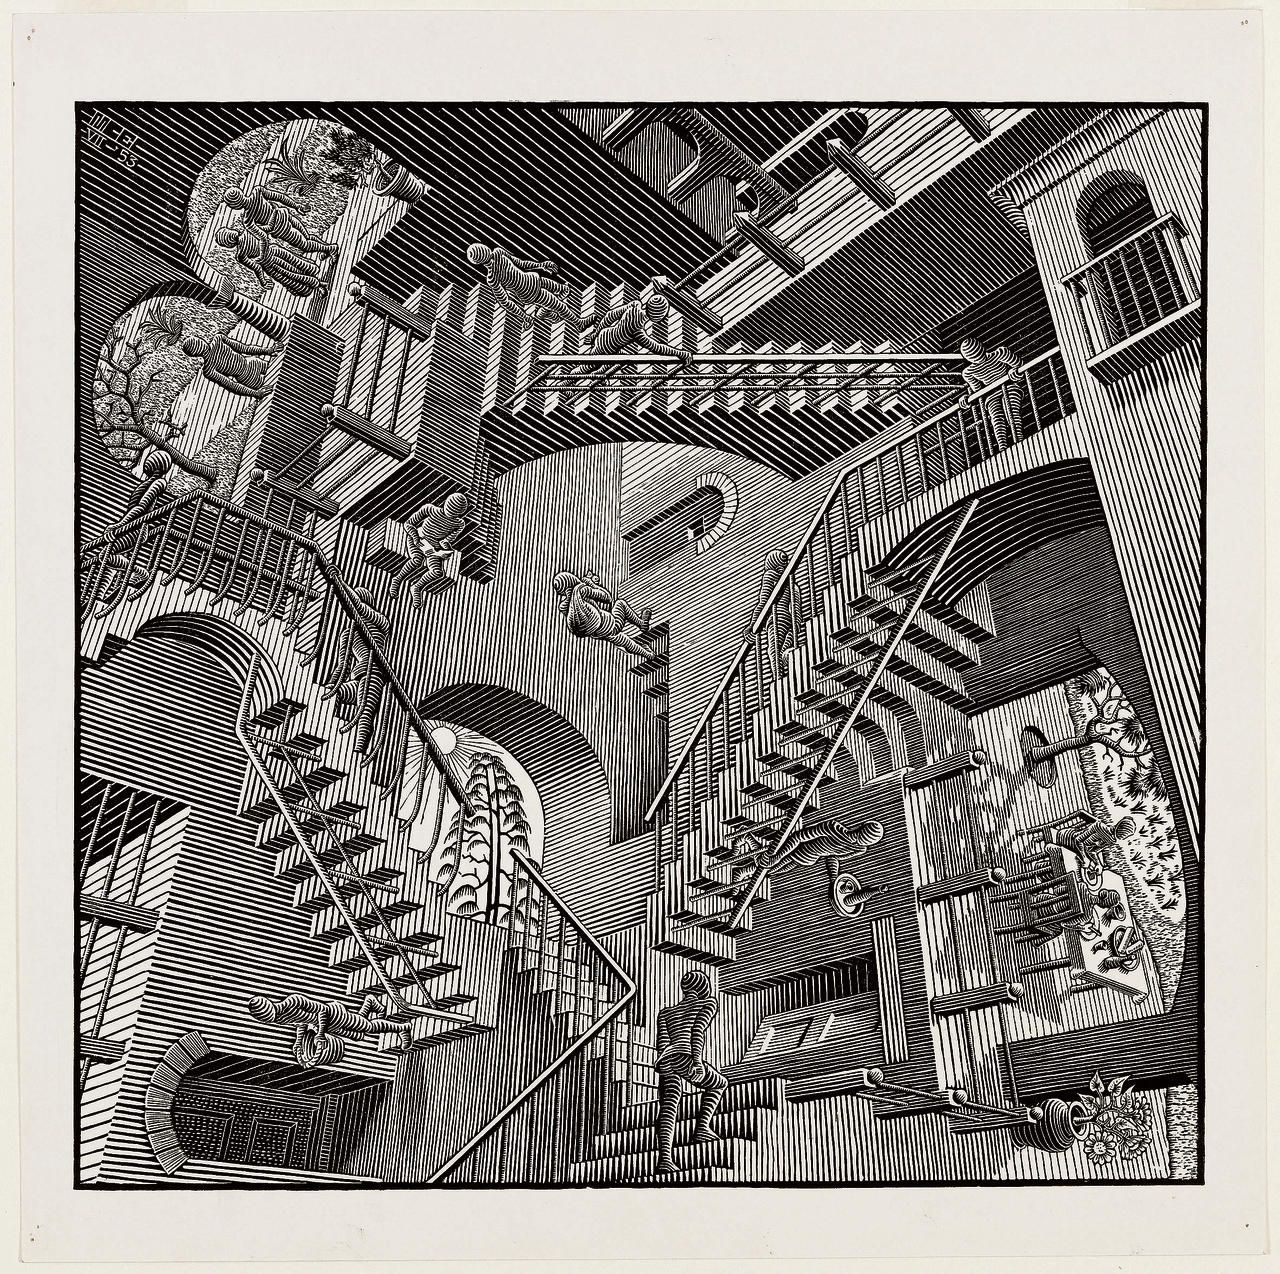 M.C. Escher: Relativiteit (Relativity), houtsnede (woodcut), 1953